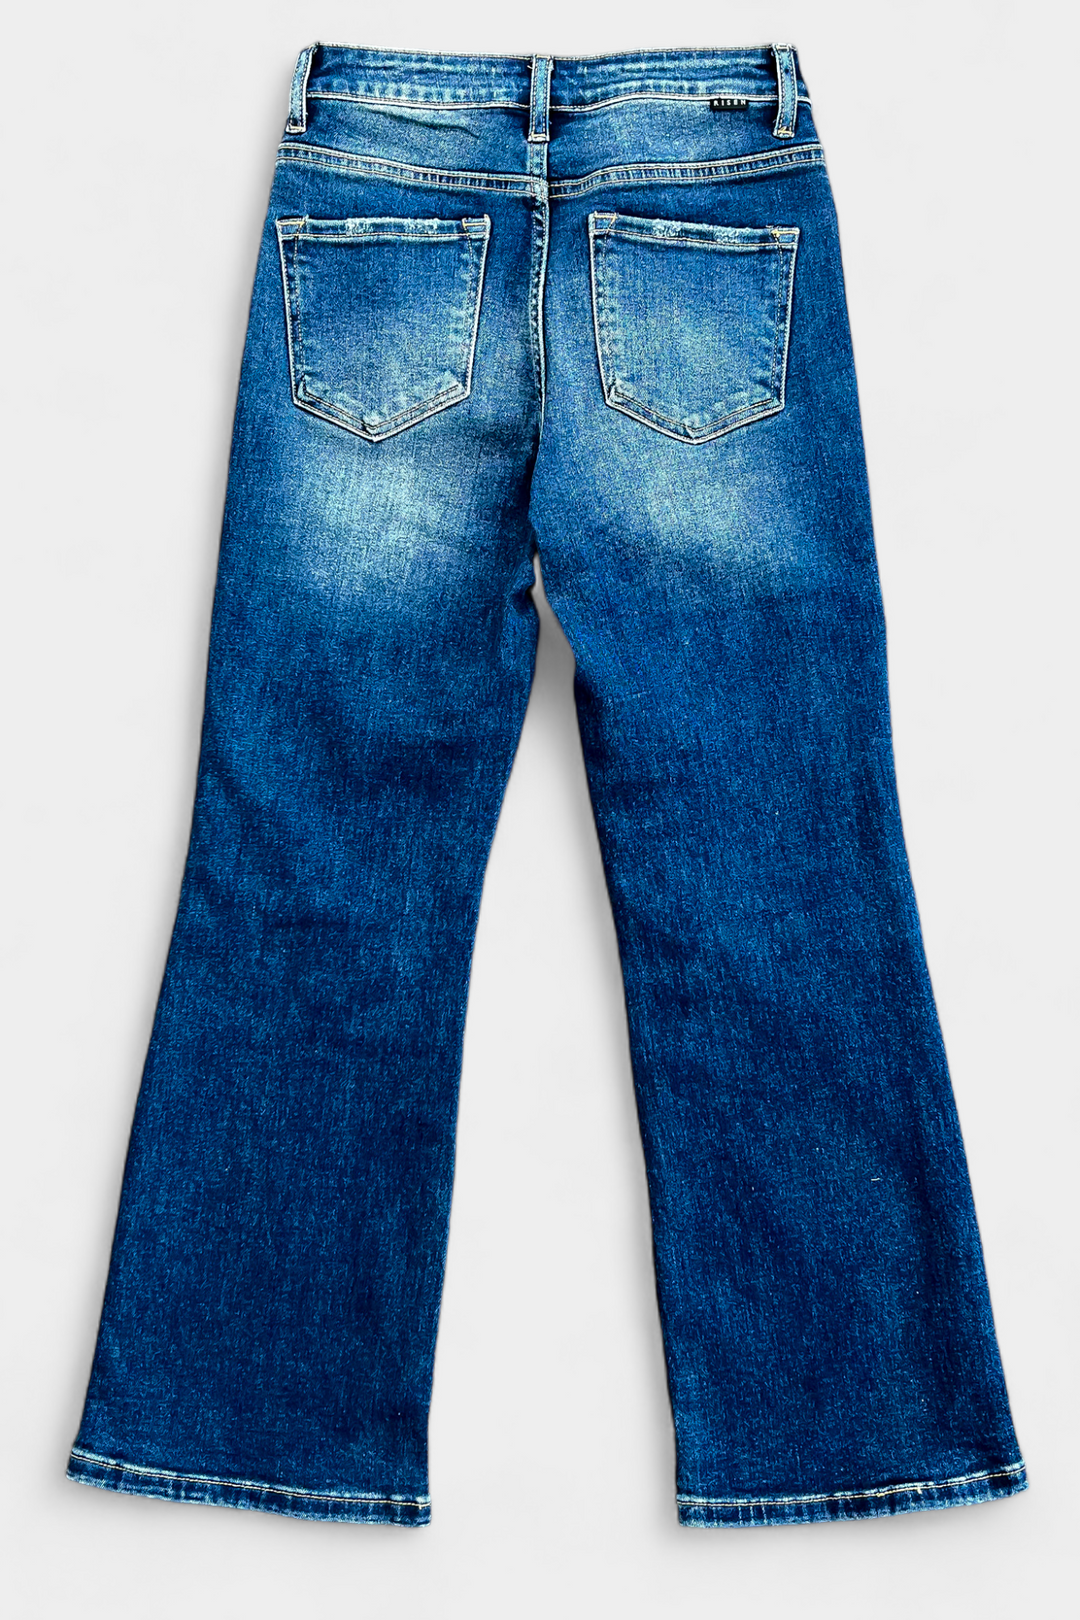 Risen RDP5742 Jeans